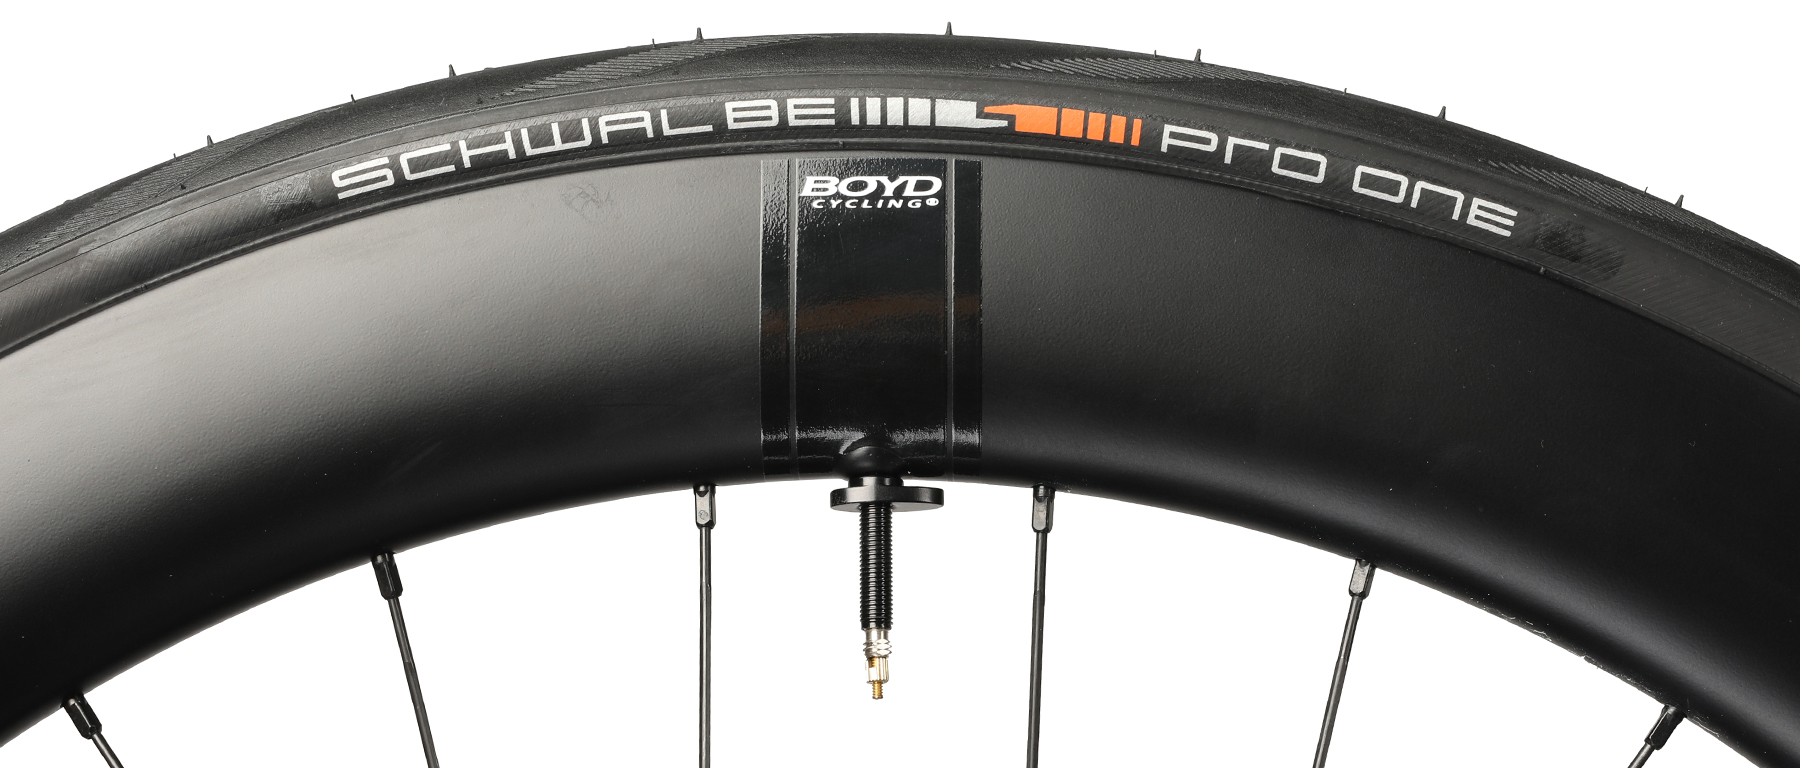 Boyd Cycling Podium 55mm Carbon Disc Wheelset DEMO